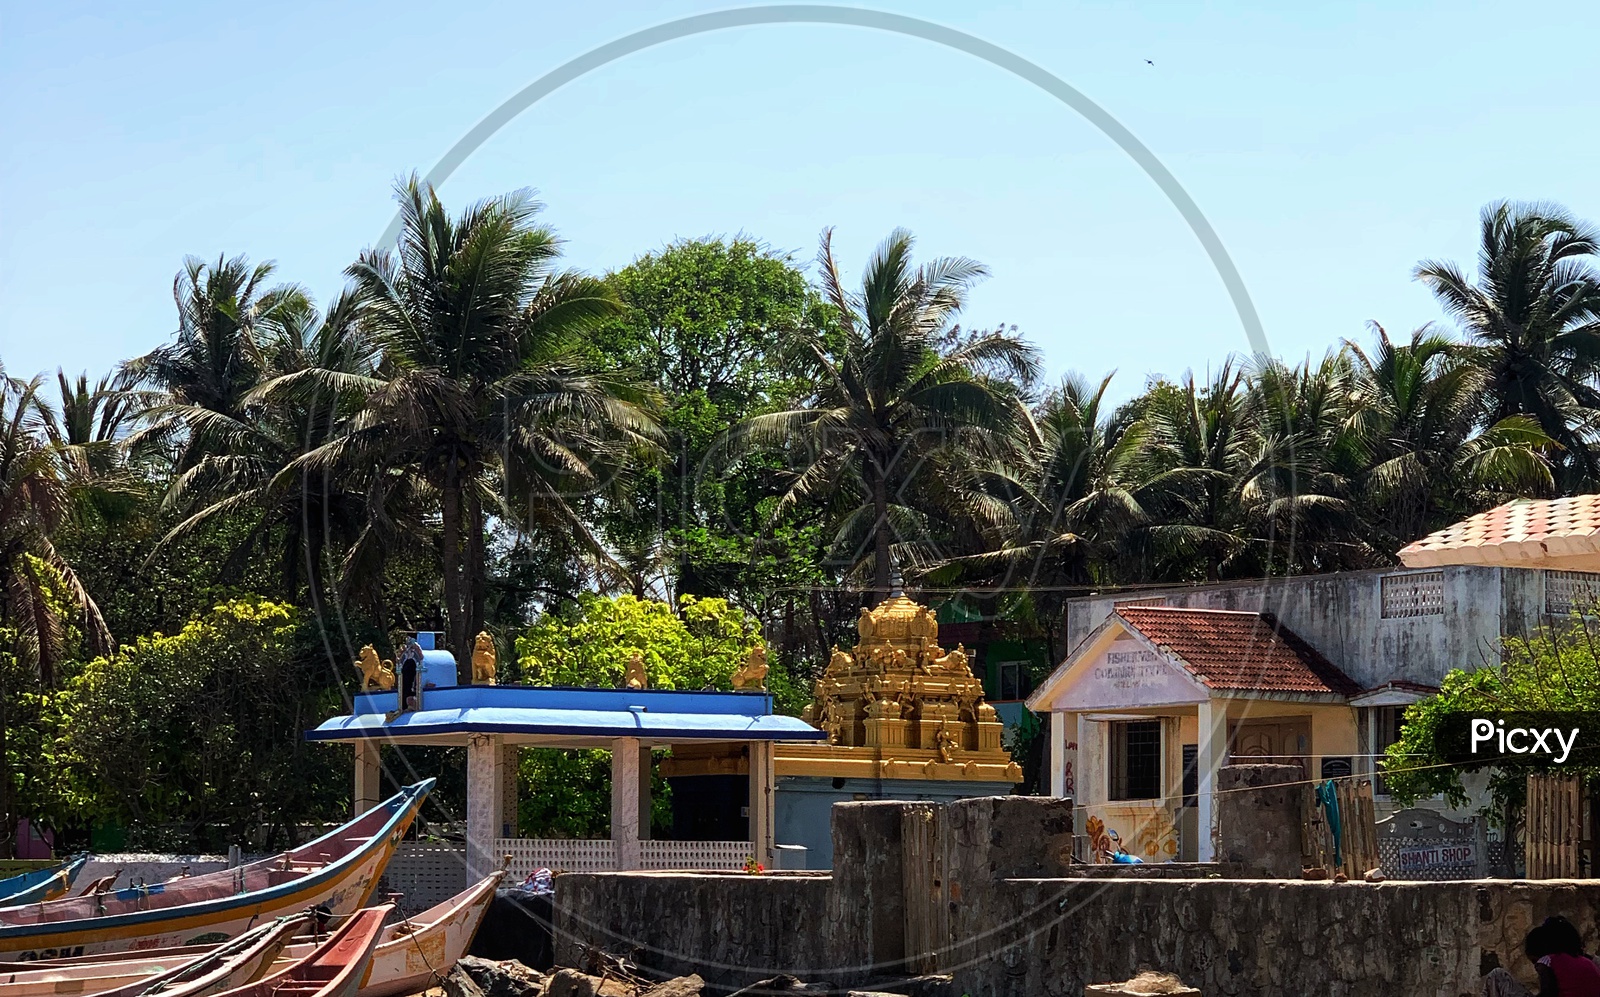 Temple at one corner in Mahabalipuram at the sea shore